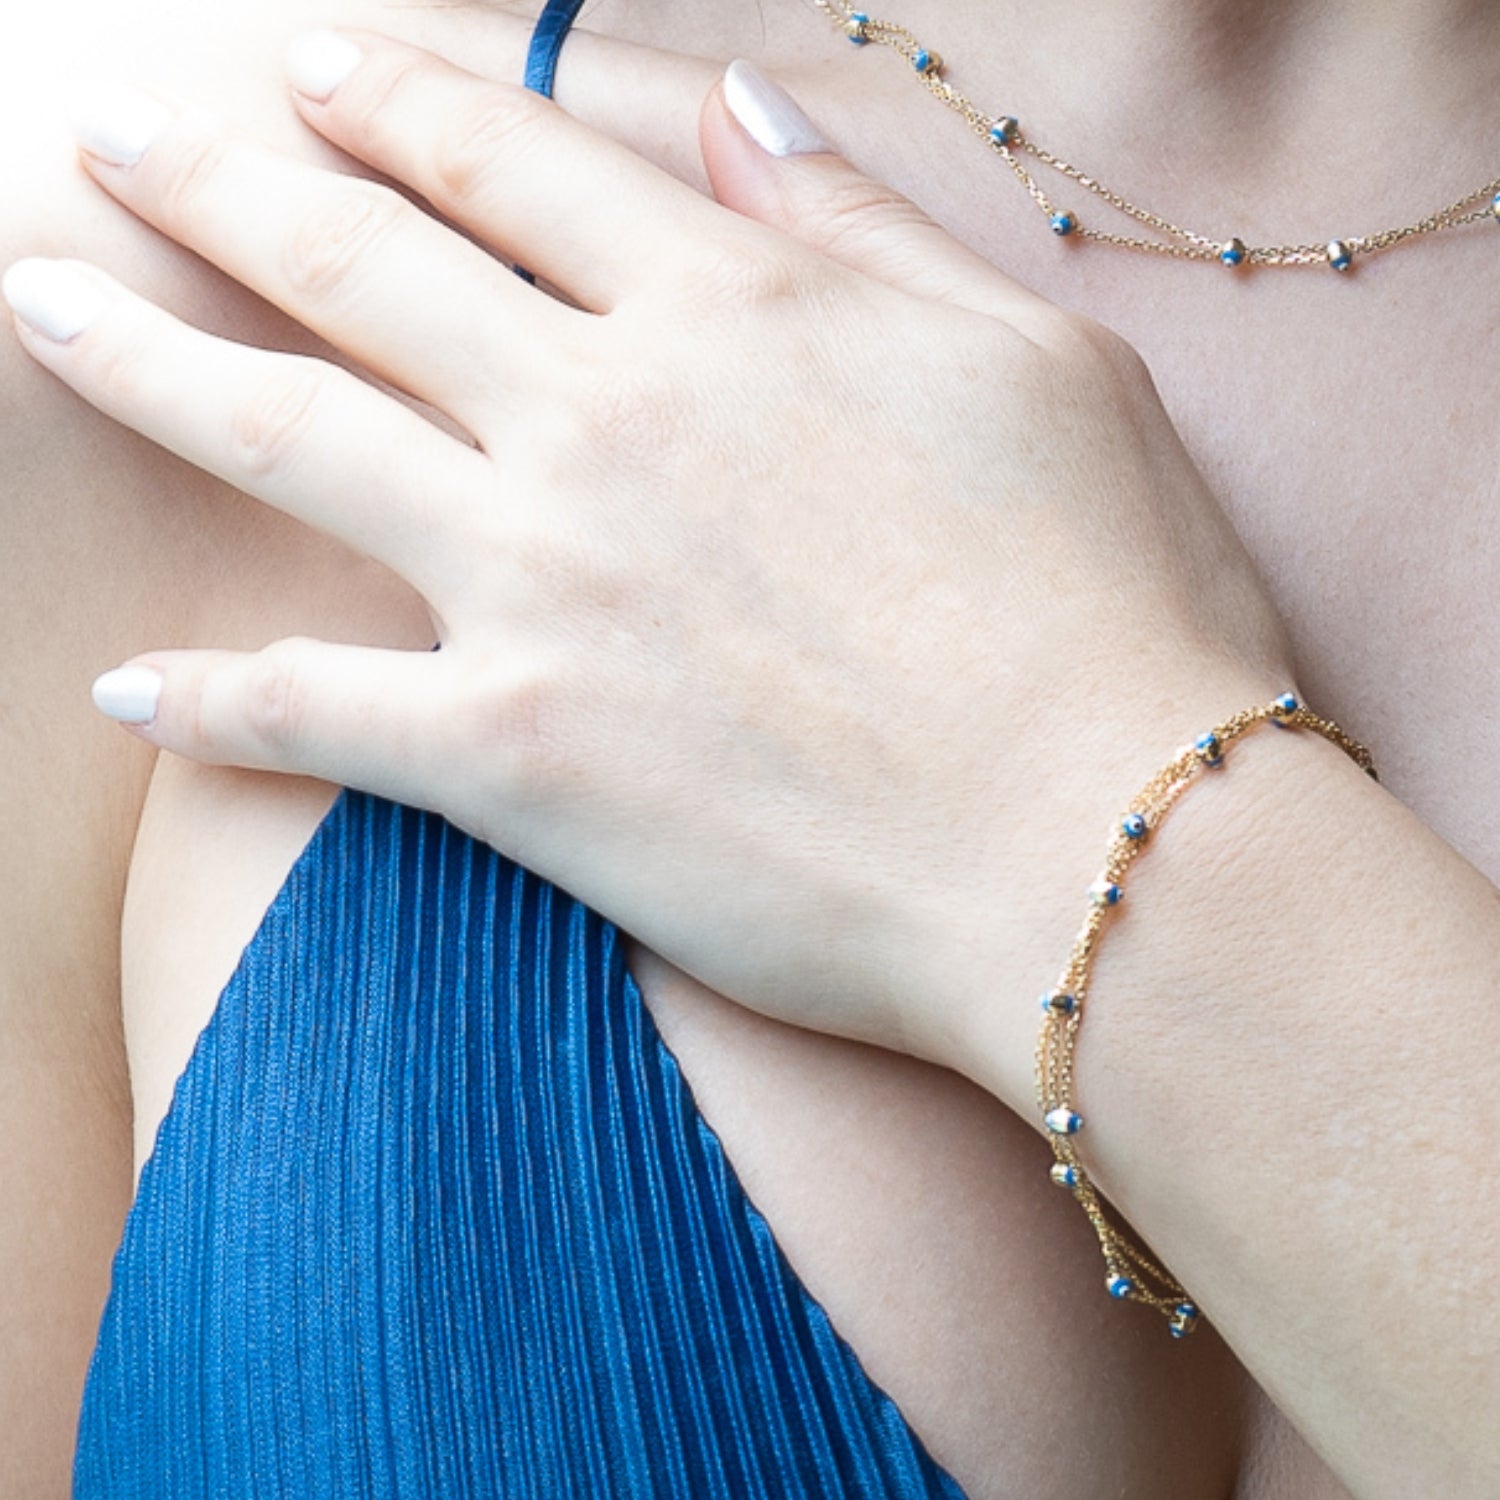 Stylish Bracelet on Hand Model - The Gold Evil Eye Triple Bracelet adorning the wrist of a confident hand model.